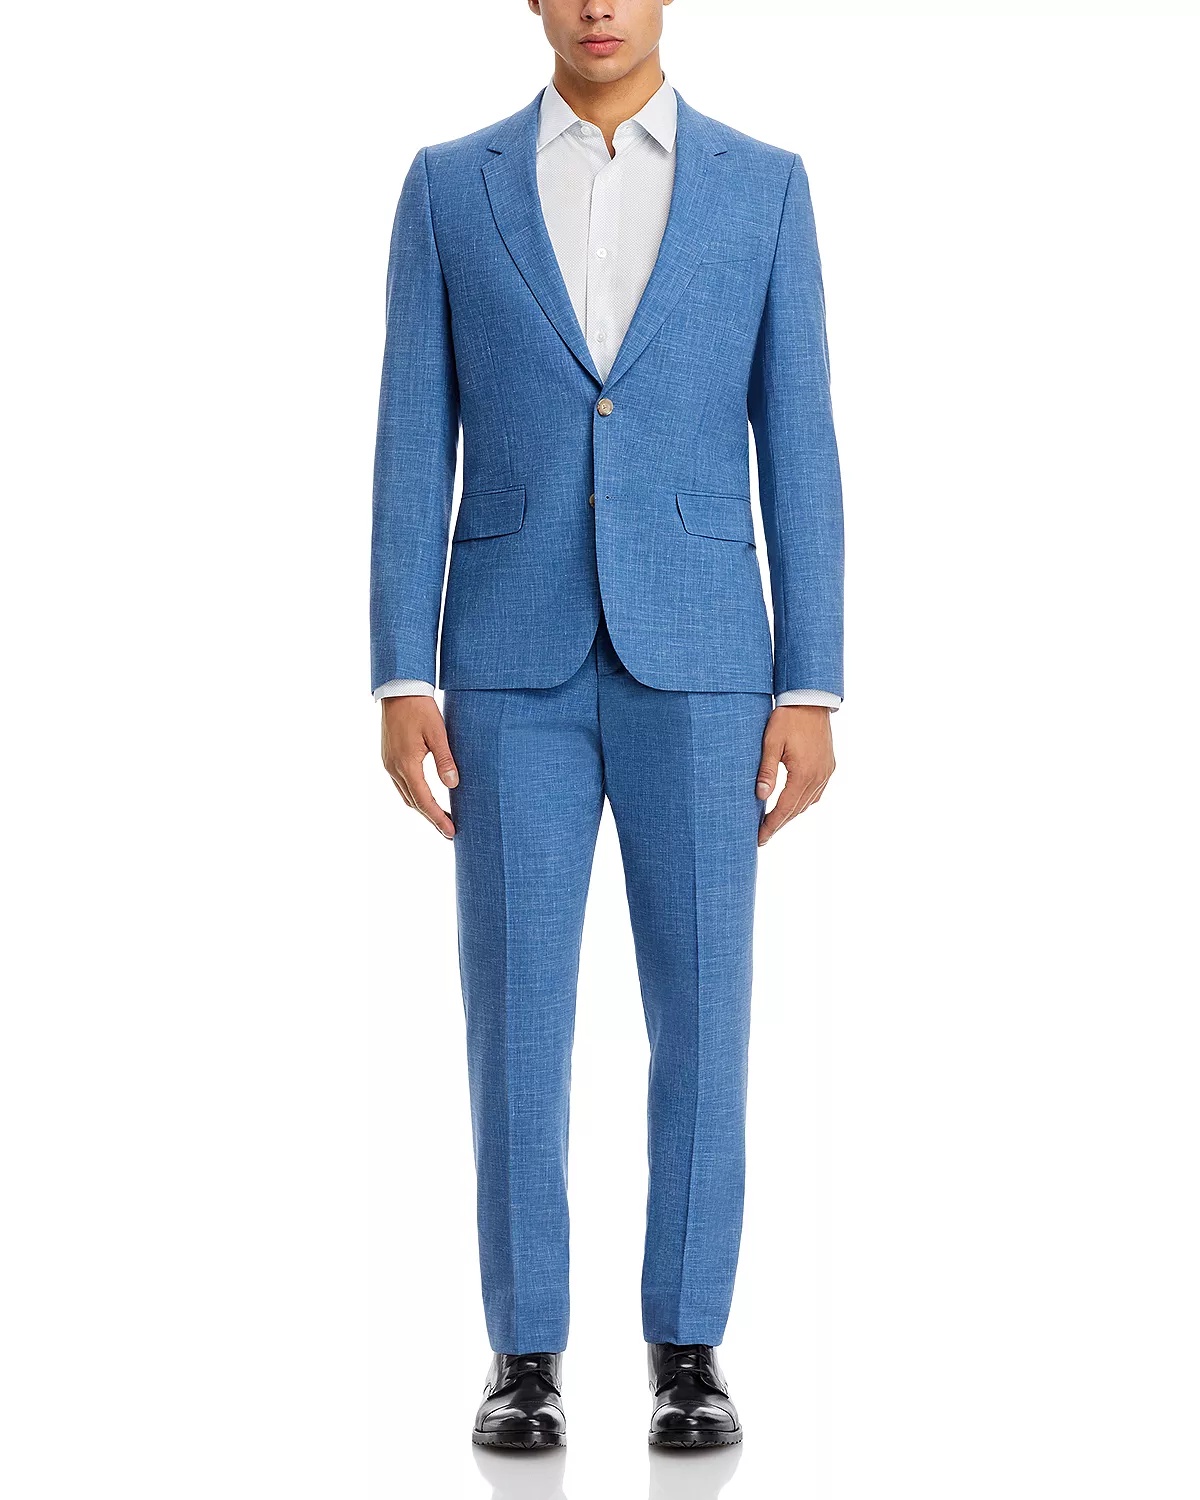 Soho Wool & Linen Slub Weave Extra Slim Fit Suit - 3